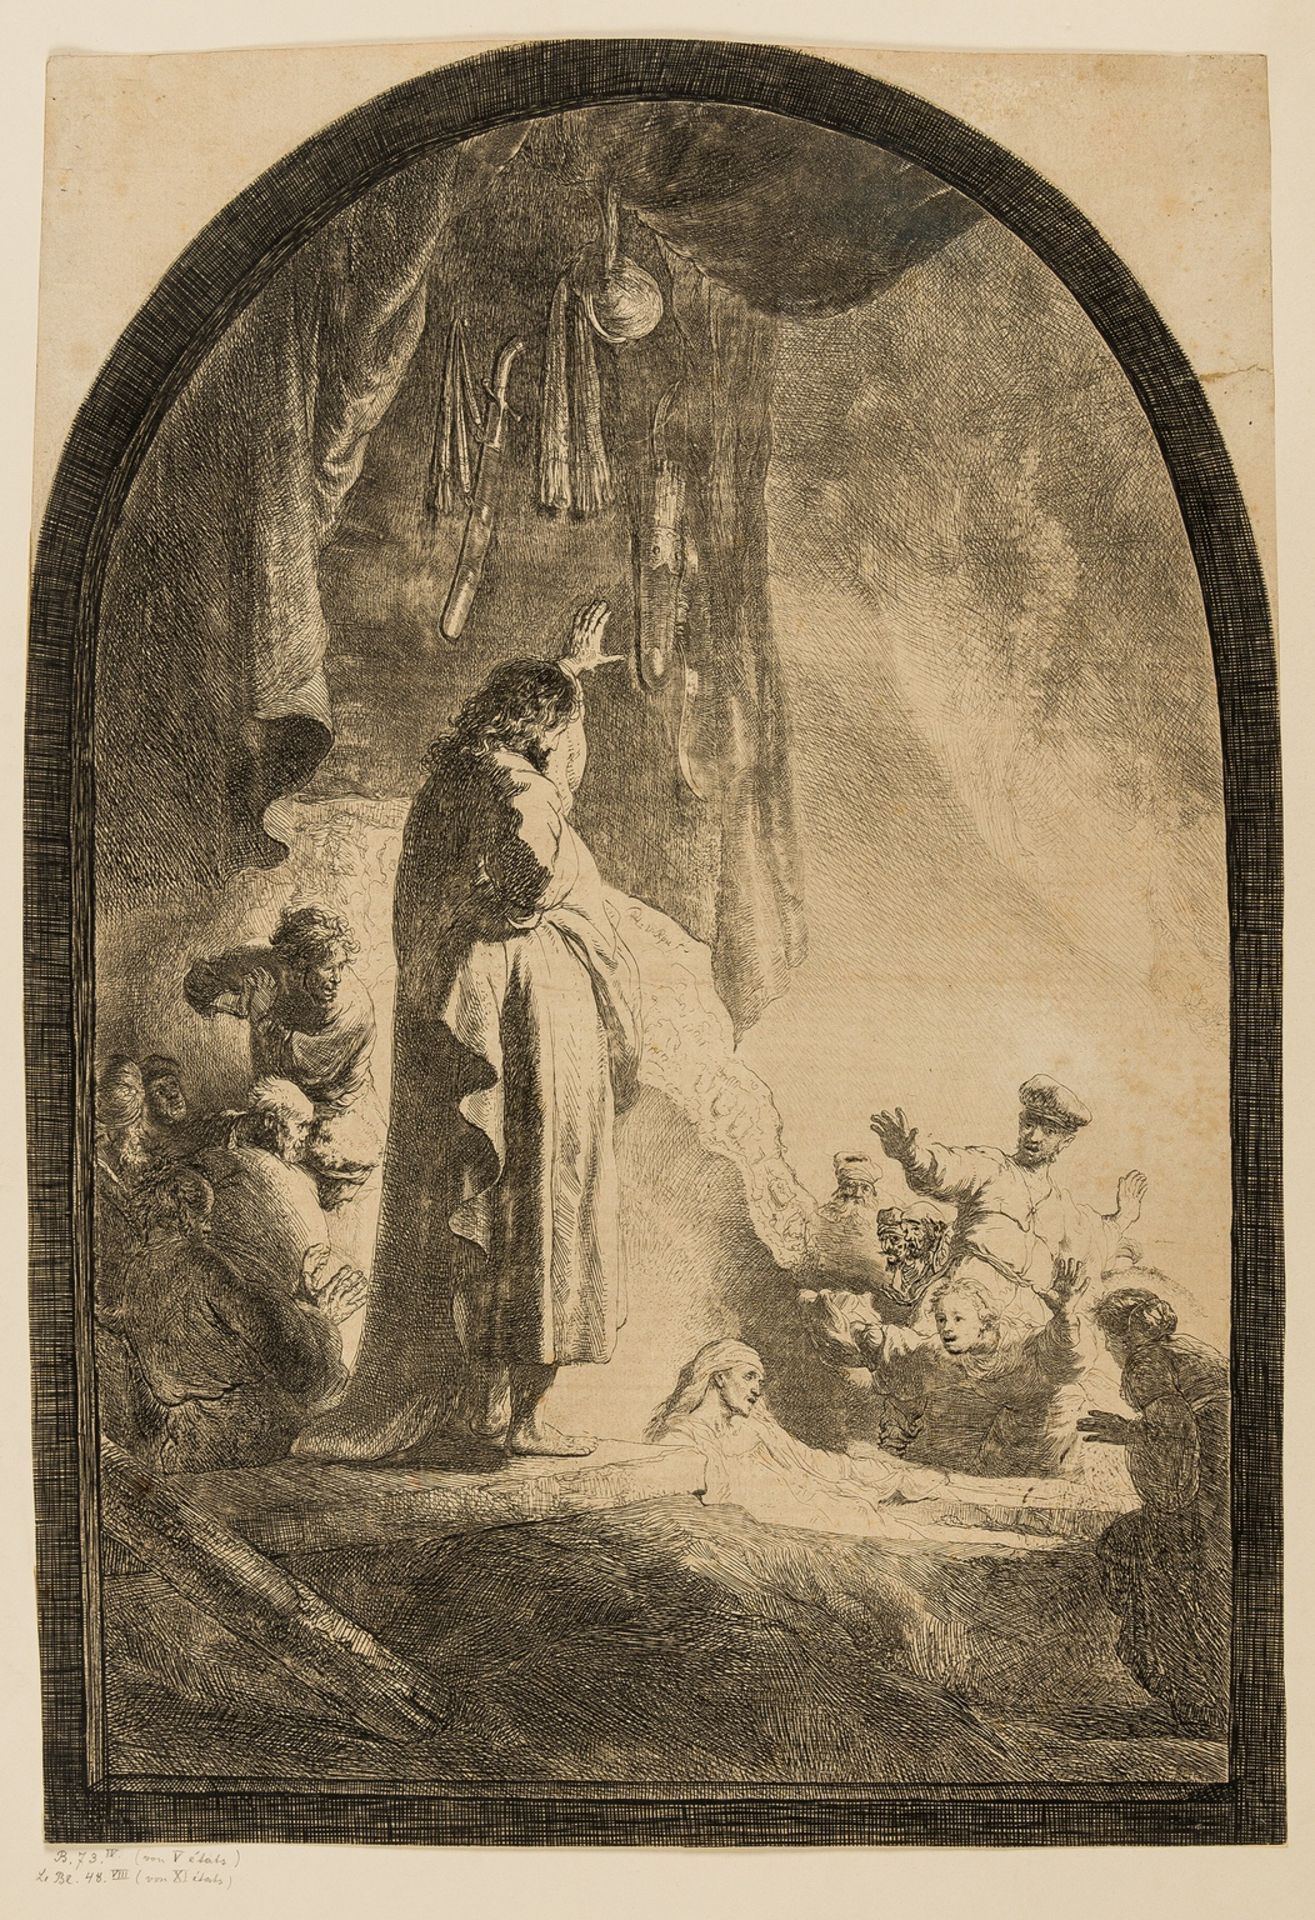 Rembrandt van Rijn (1606-1669) The Raising of Lazarus: The Larger Plate